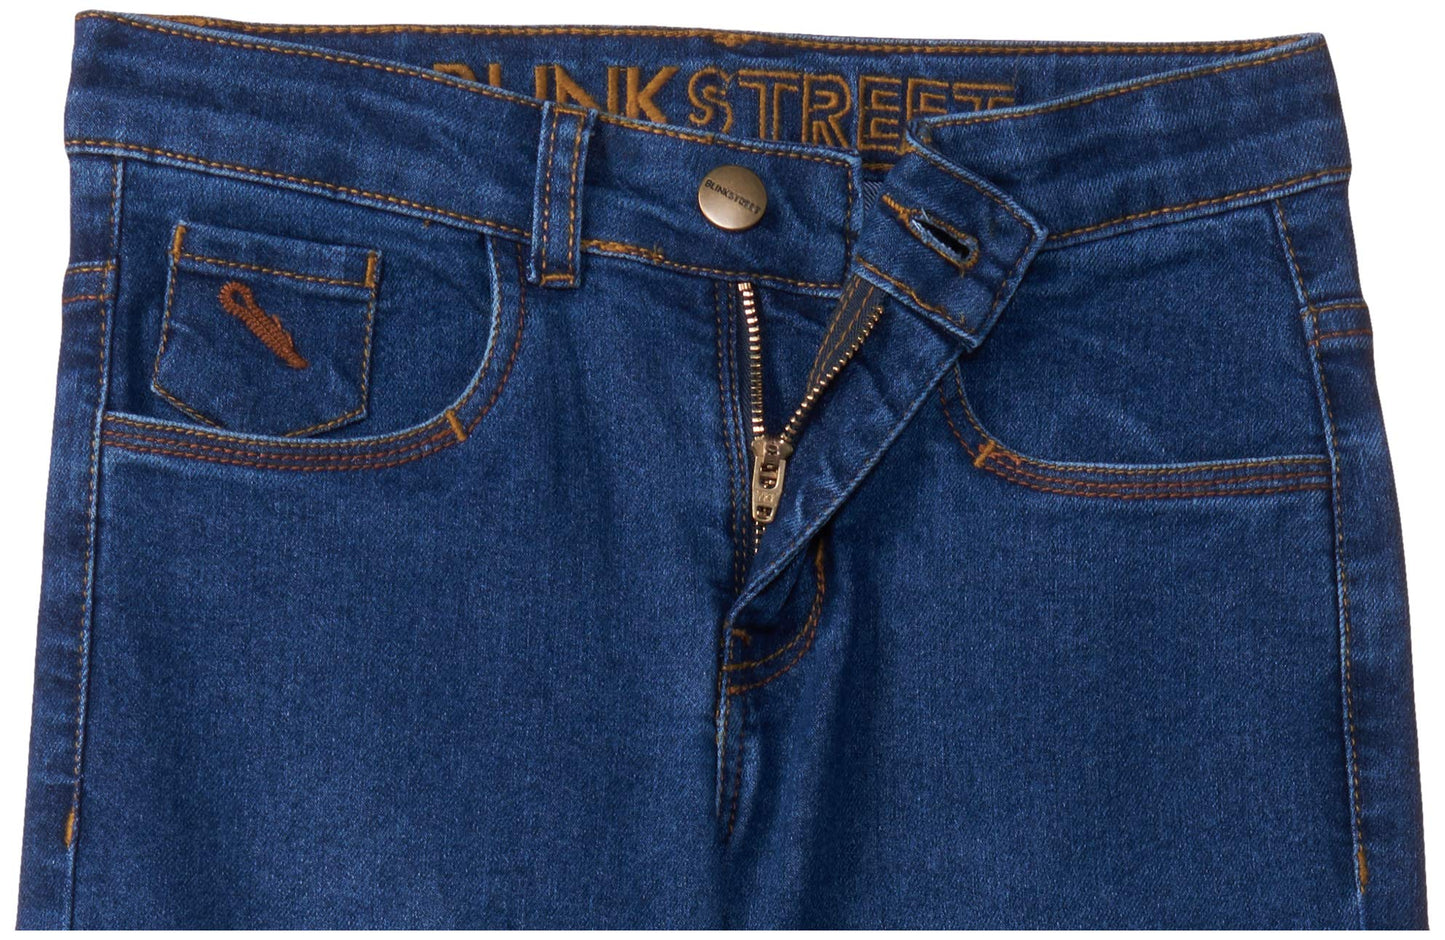 Blink Street Boy's Regular Fit Jeans